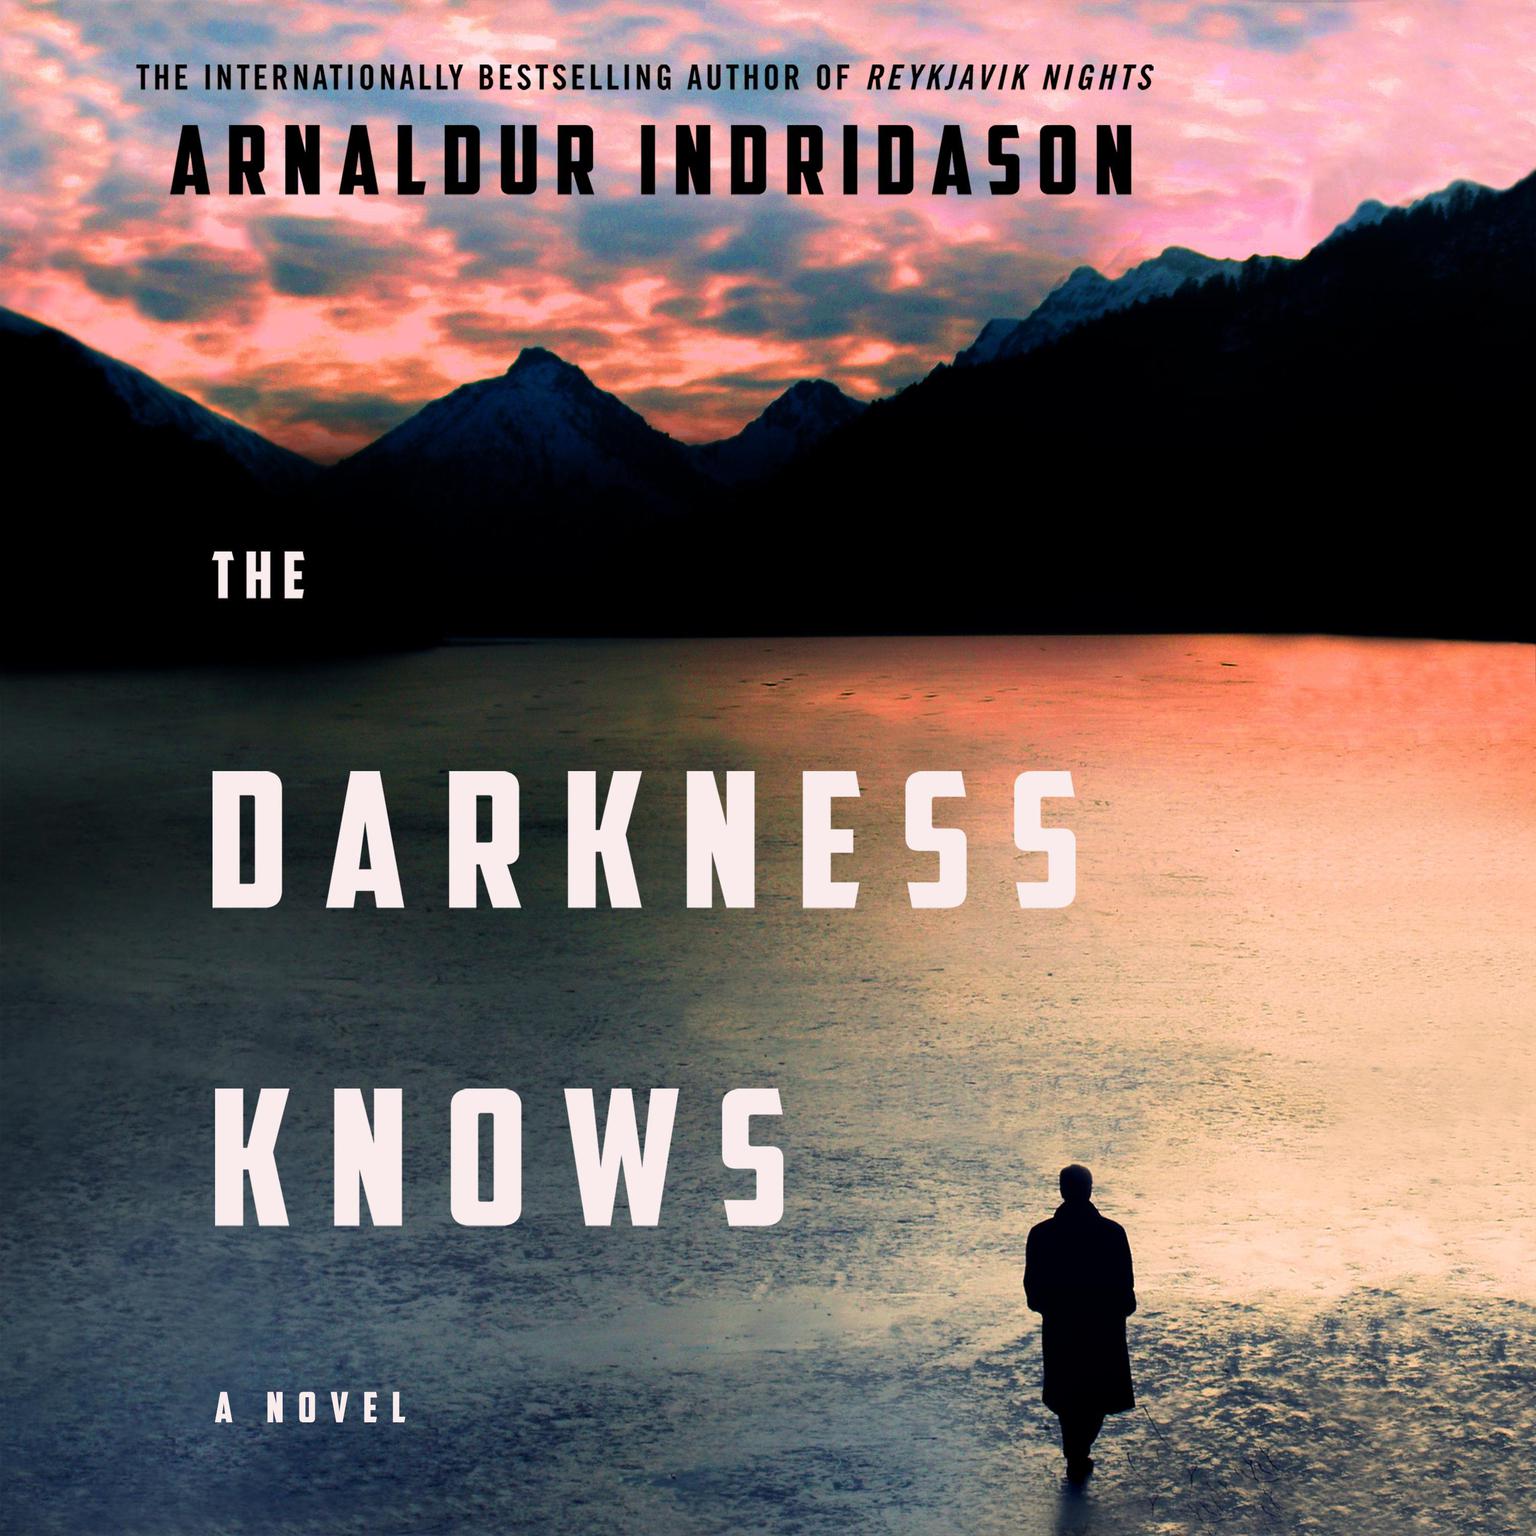 The Darkness Knows: A Novel Audiobook, by Arnaldur Indridason